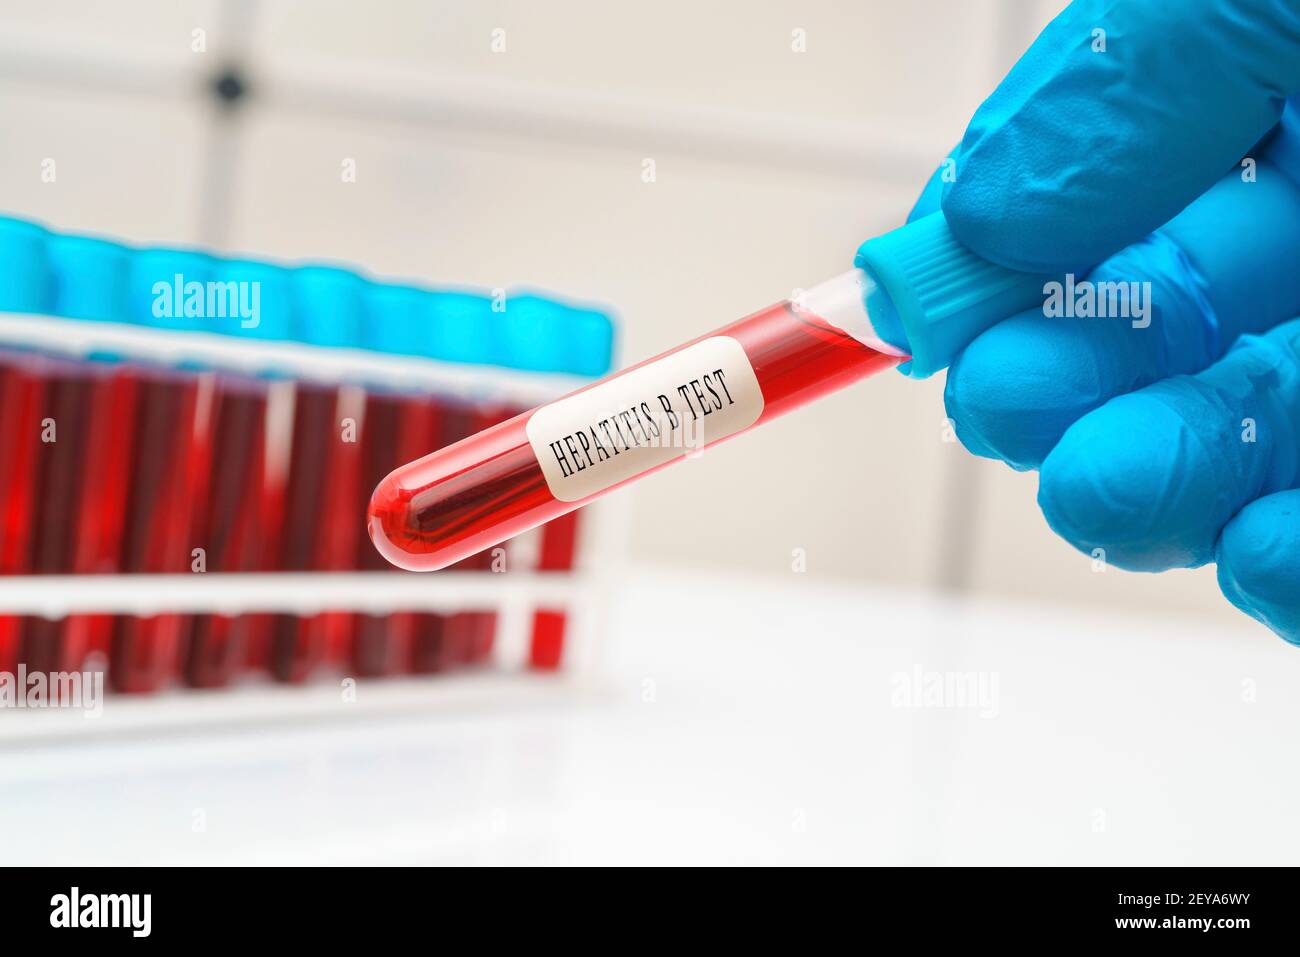 Hepatitis B blood test, conceptual image Stock Photo